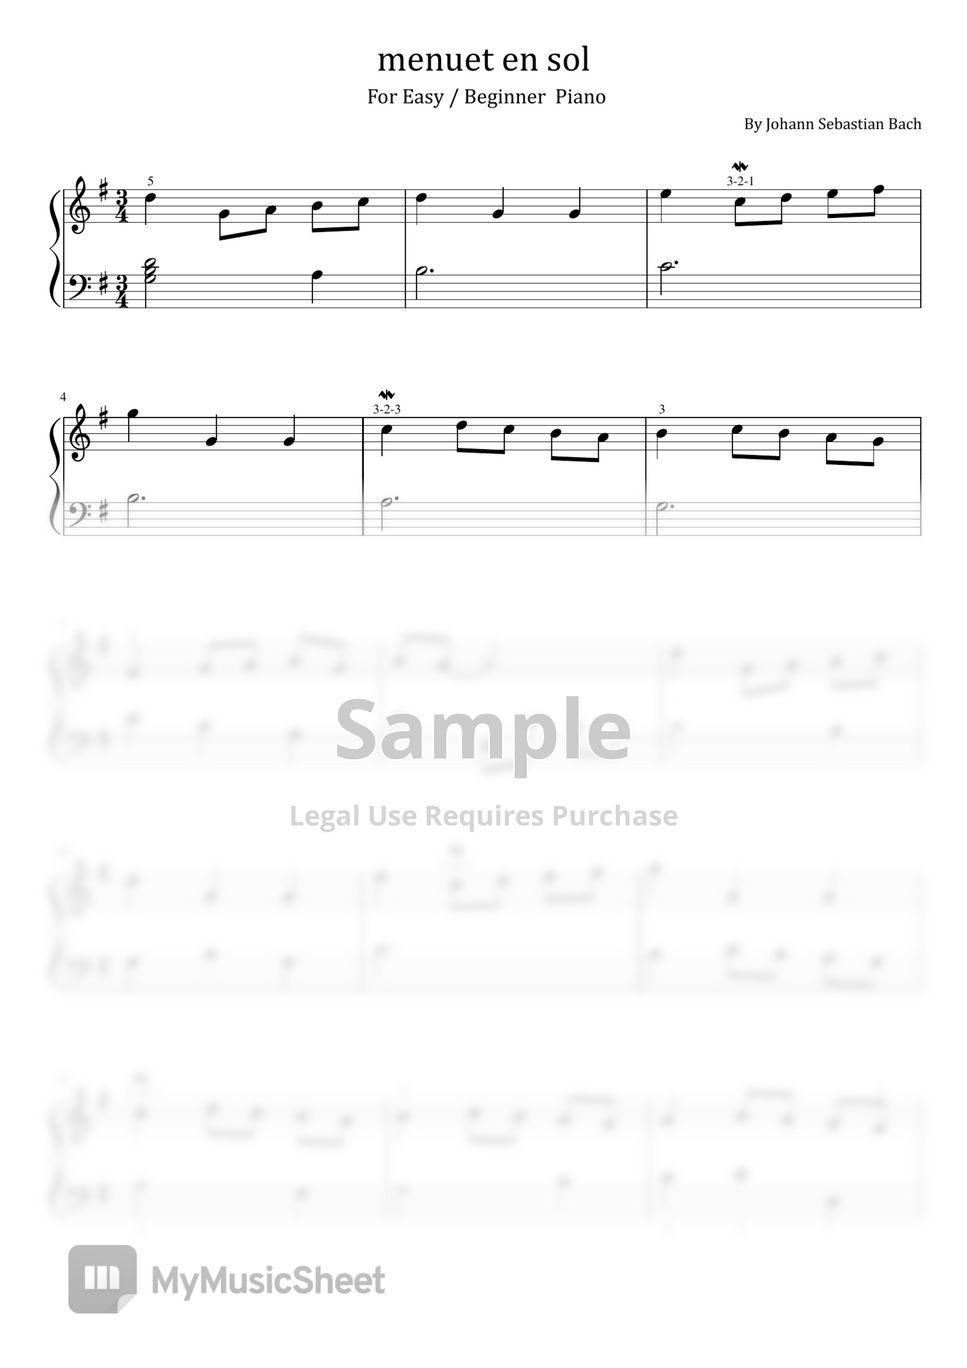 Johann Sebastian Bach - menuet en sol (For Easy / Beginner Piano With ...